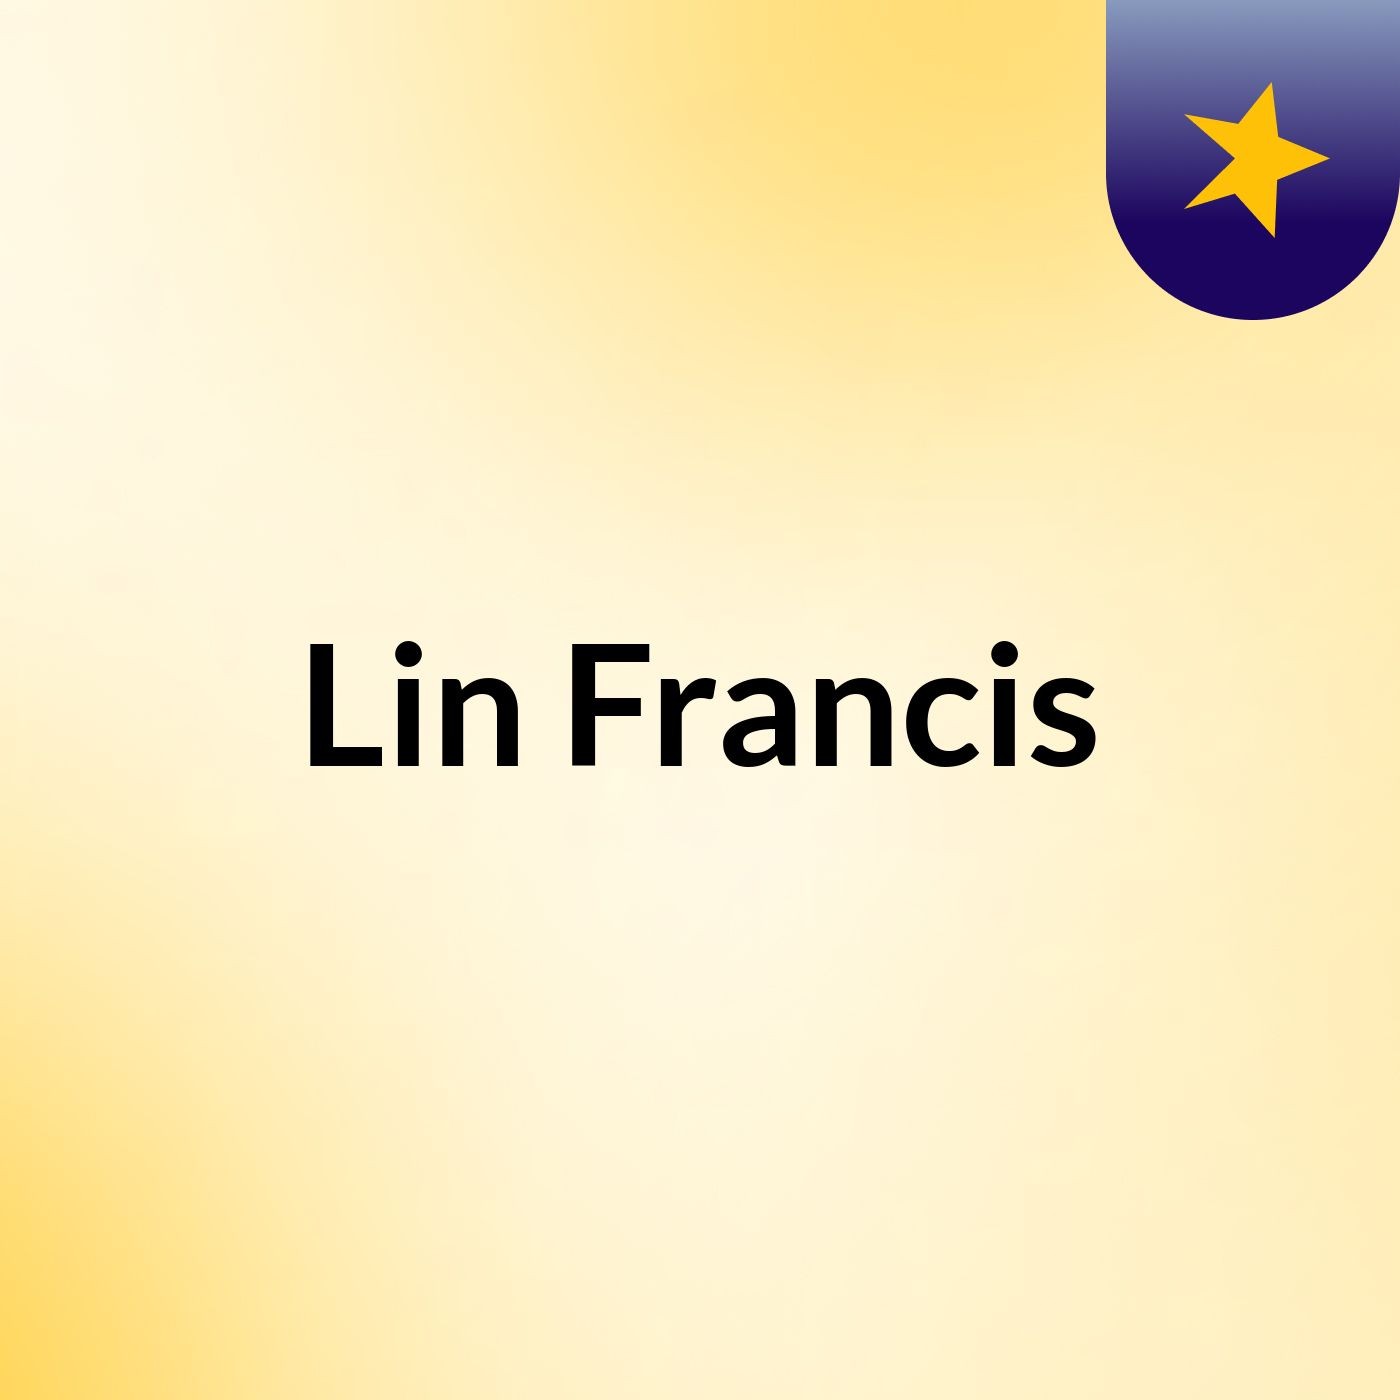 Lin Francis